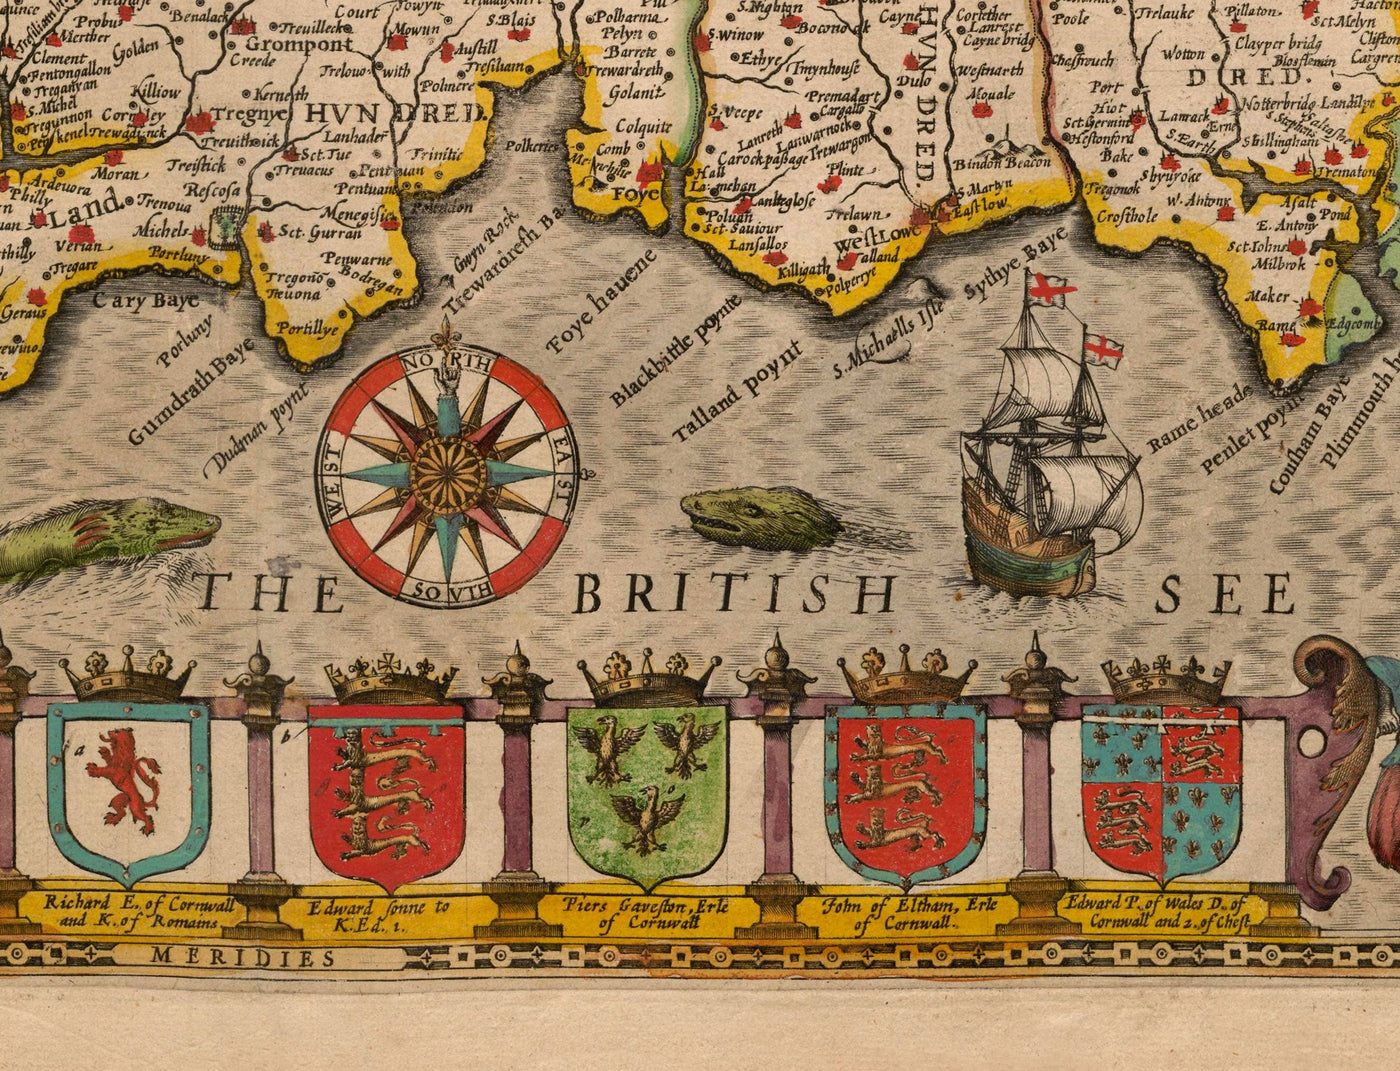 Viejo mapa de Cornwall en 1611 por John Speed ​​- Falmouth, Redruth, St Austell, Truro, Penzancia